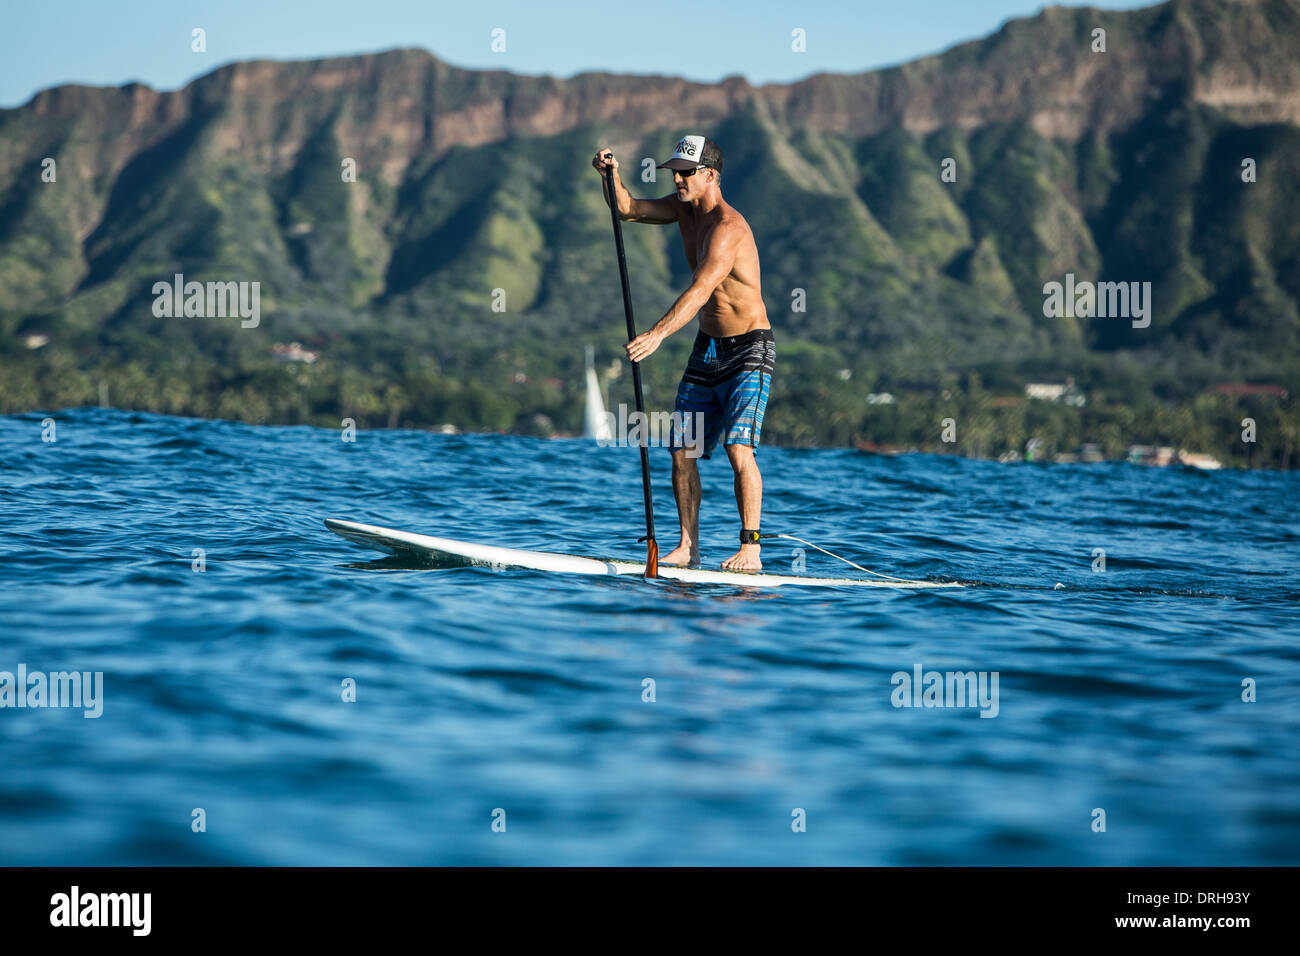 Hawaii Honolulu SUP Stand up Paddle board Waikiki Beach board ocean sport paddle winter [Brad Osborn] sunset Stock Photo